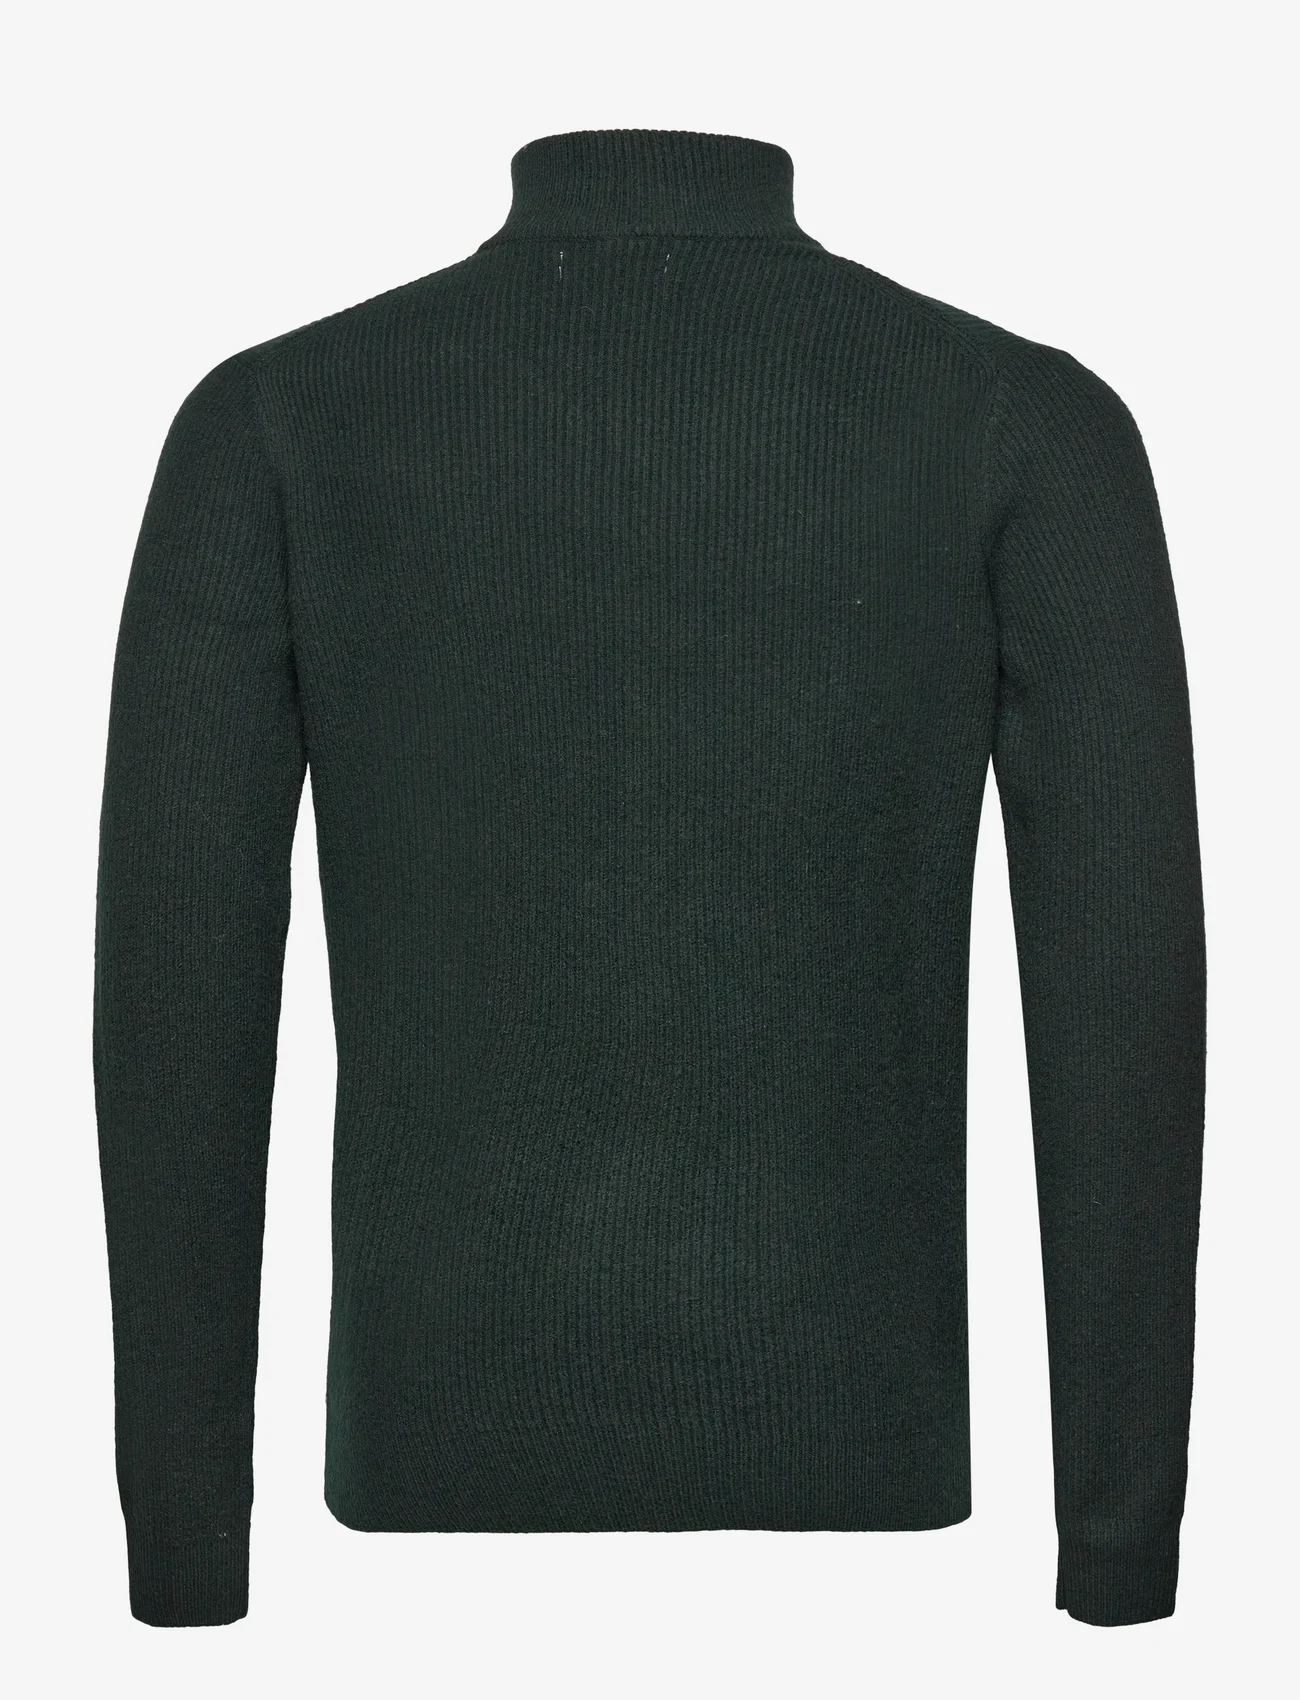 Mango - Ribbed sweater with zip - menn - dark green - 1